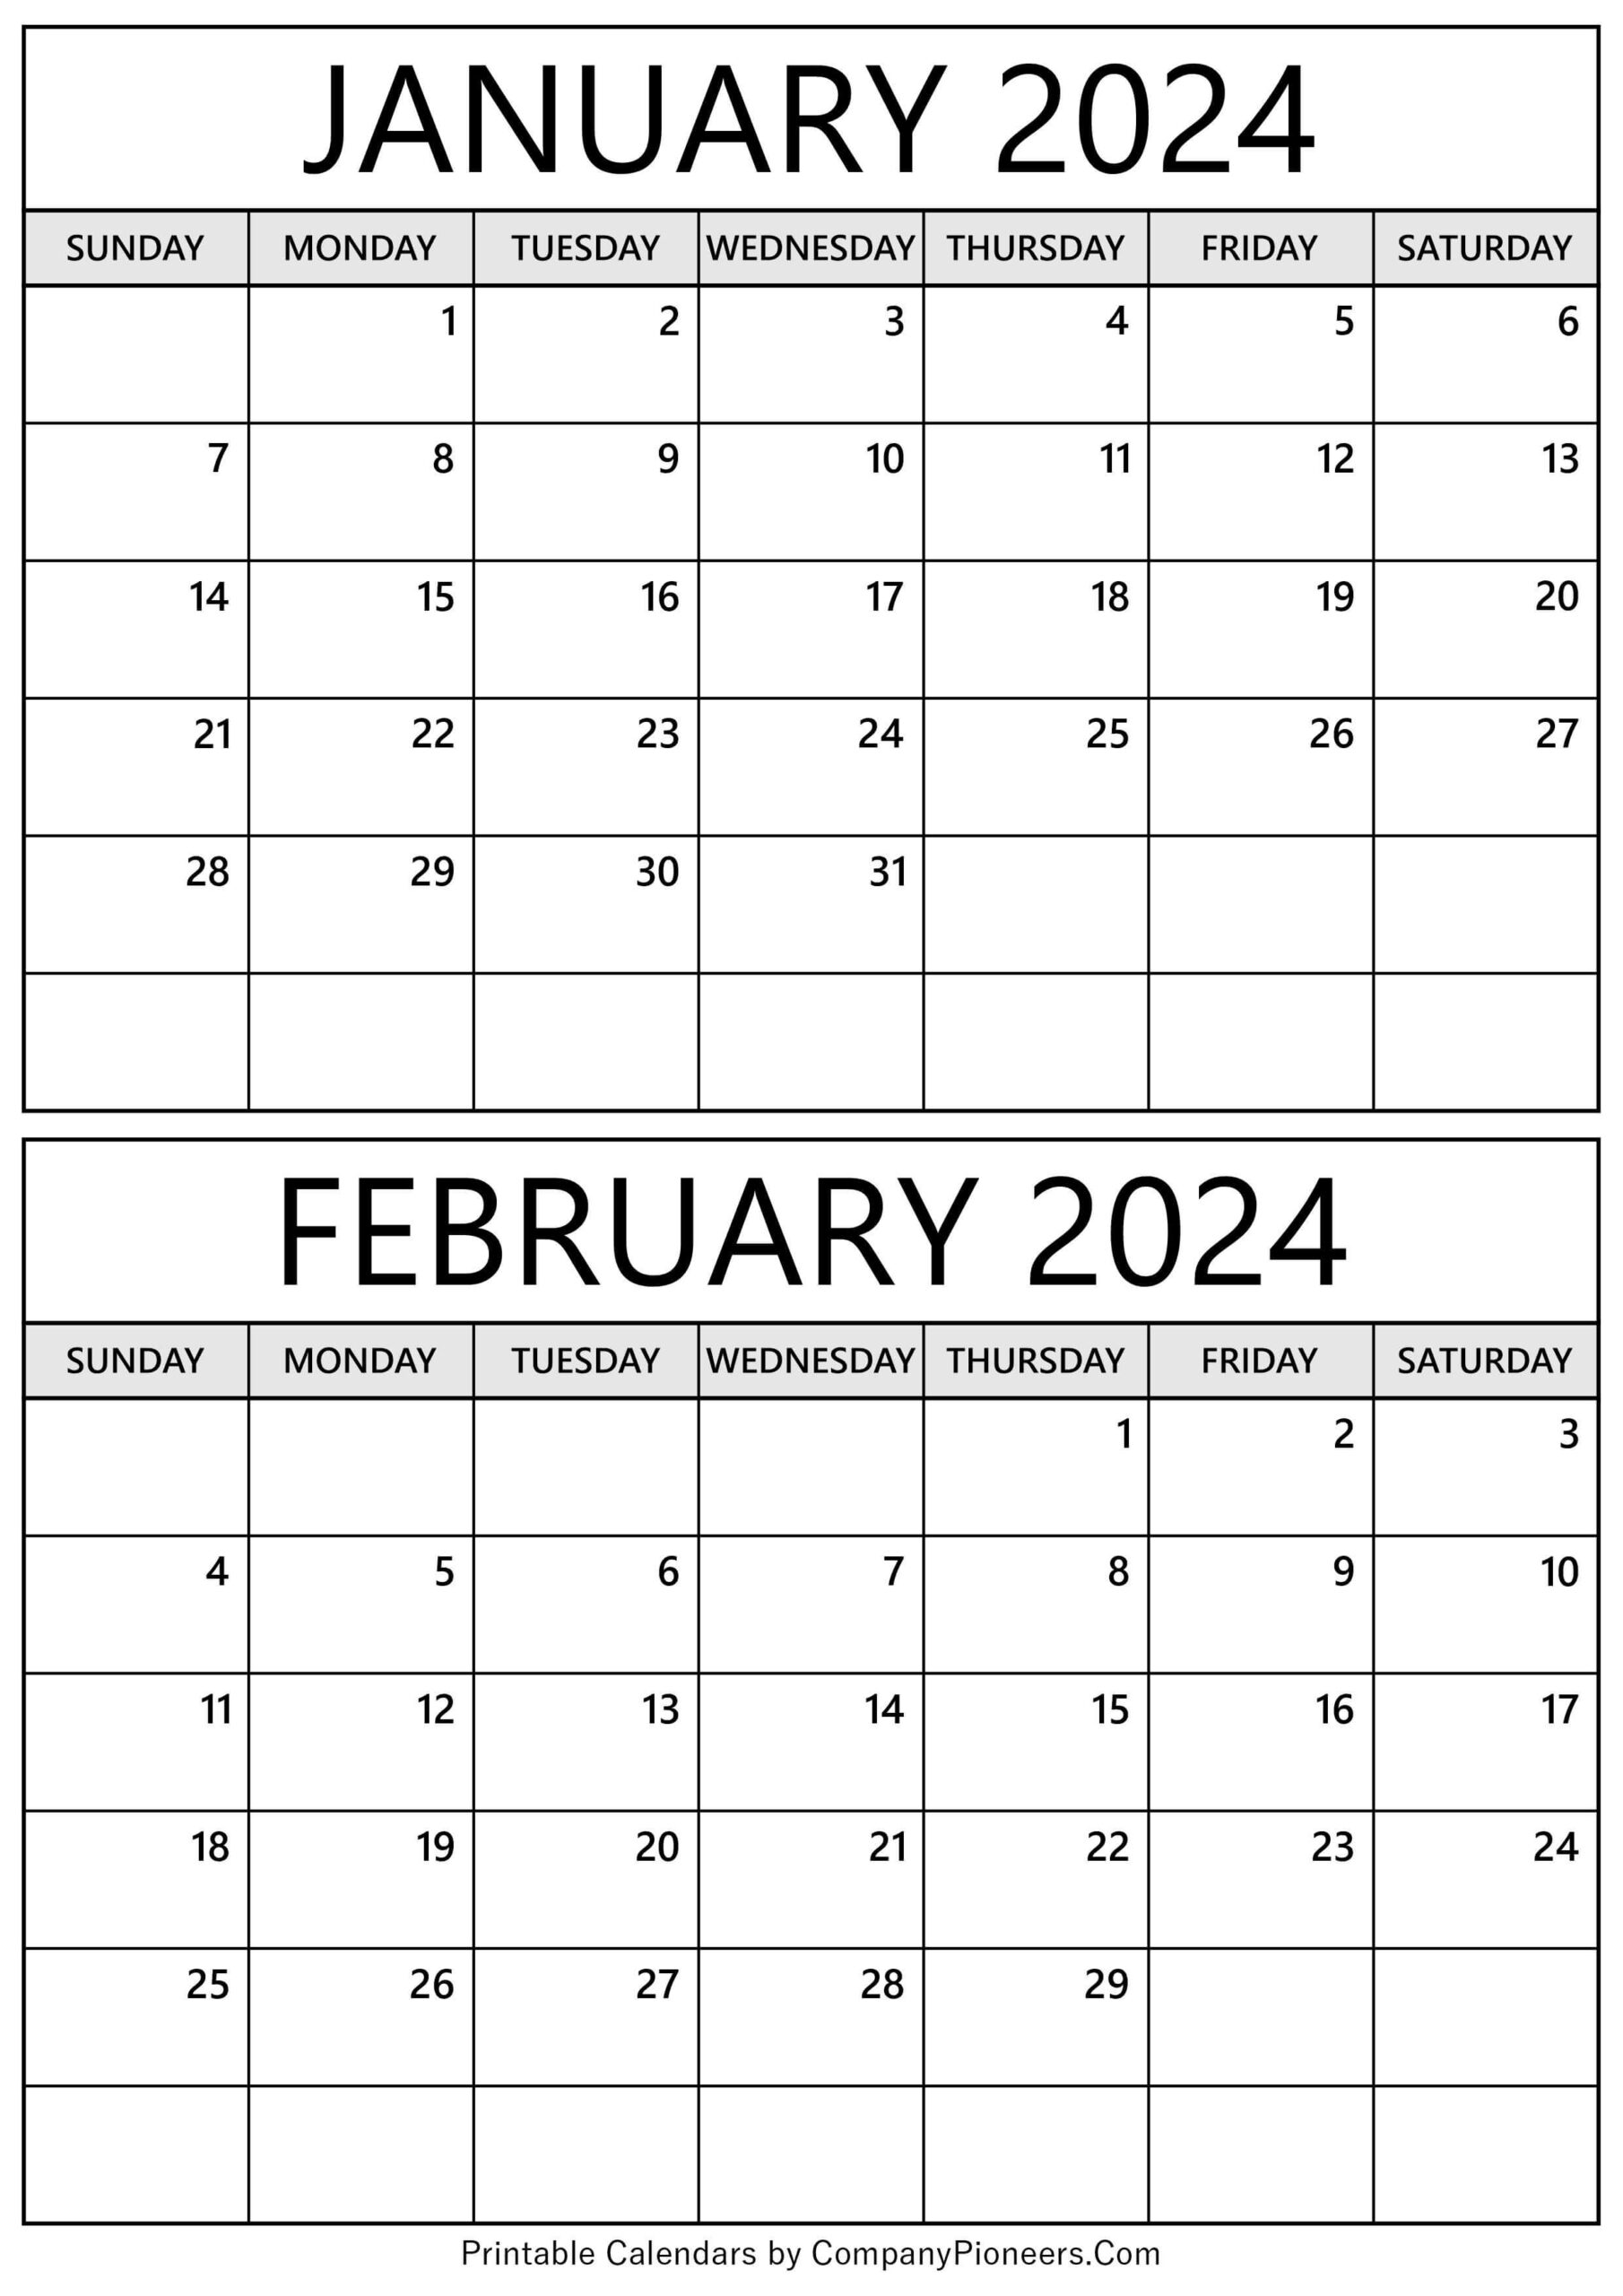 January February 2024 Calendar Printable - Template for January February 2024 Printable Calendar